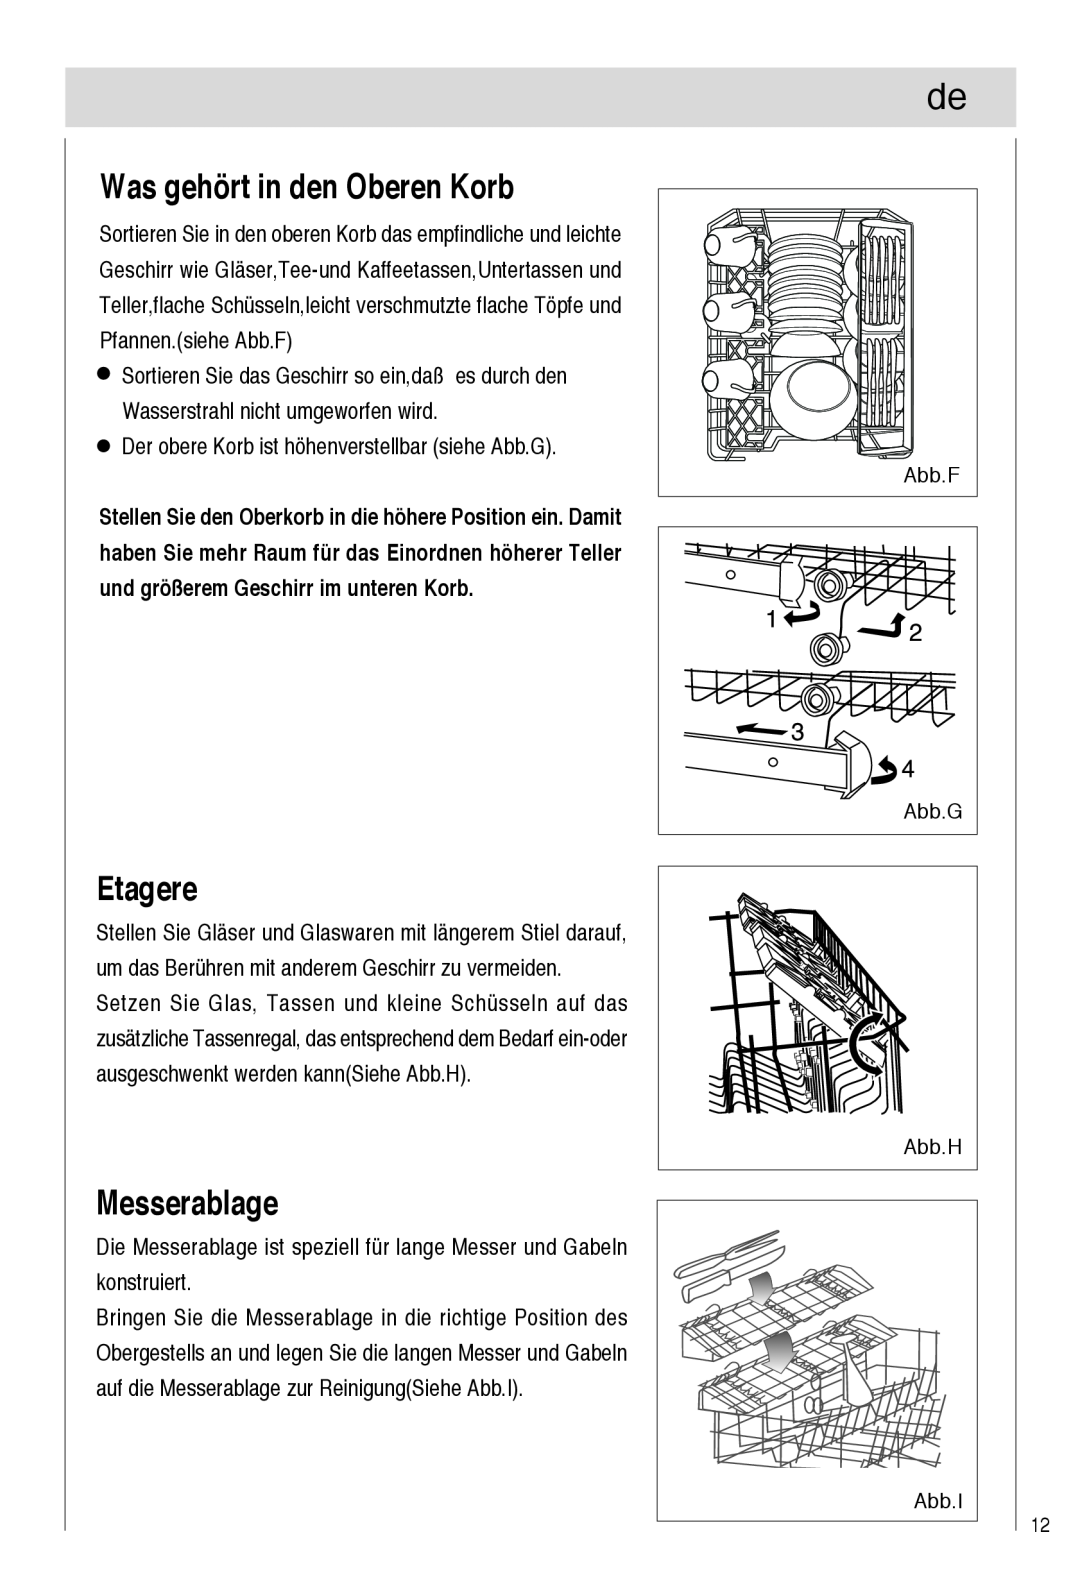 Haier DW9-TFE1 operation manual Was gehört in den Oberen Korb, Etagere, Messerablage, Abb.F, Abb.G 